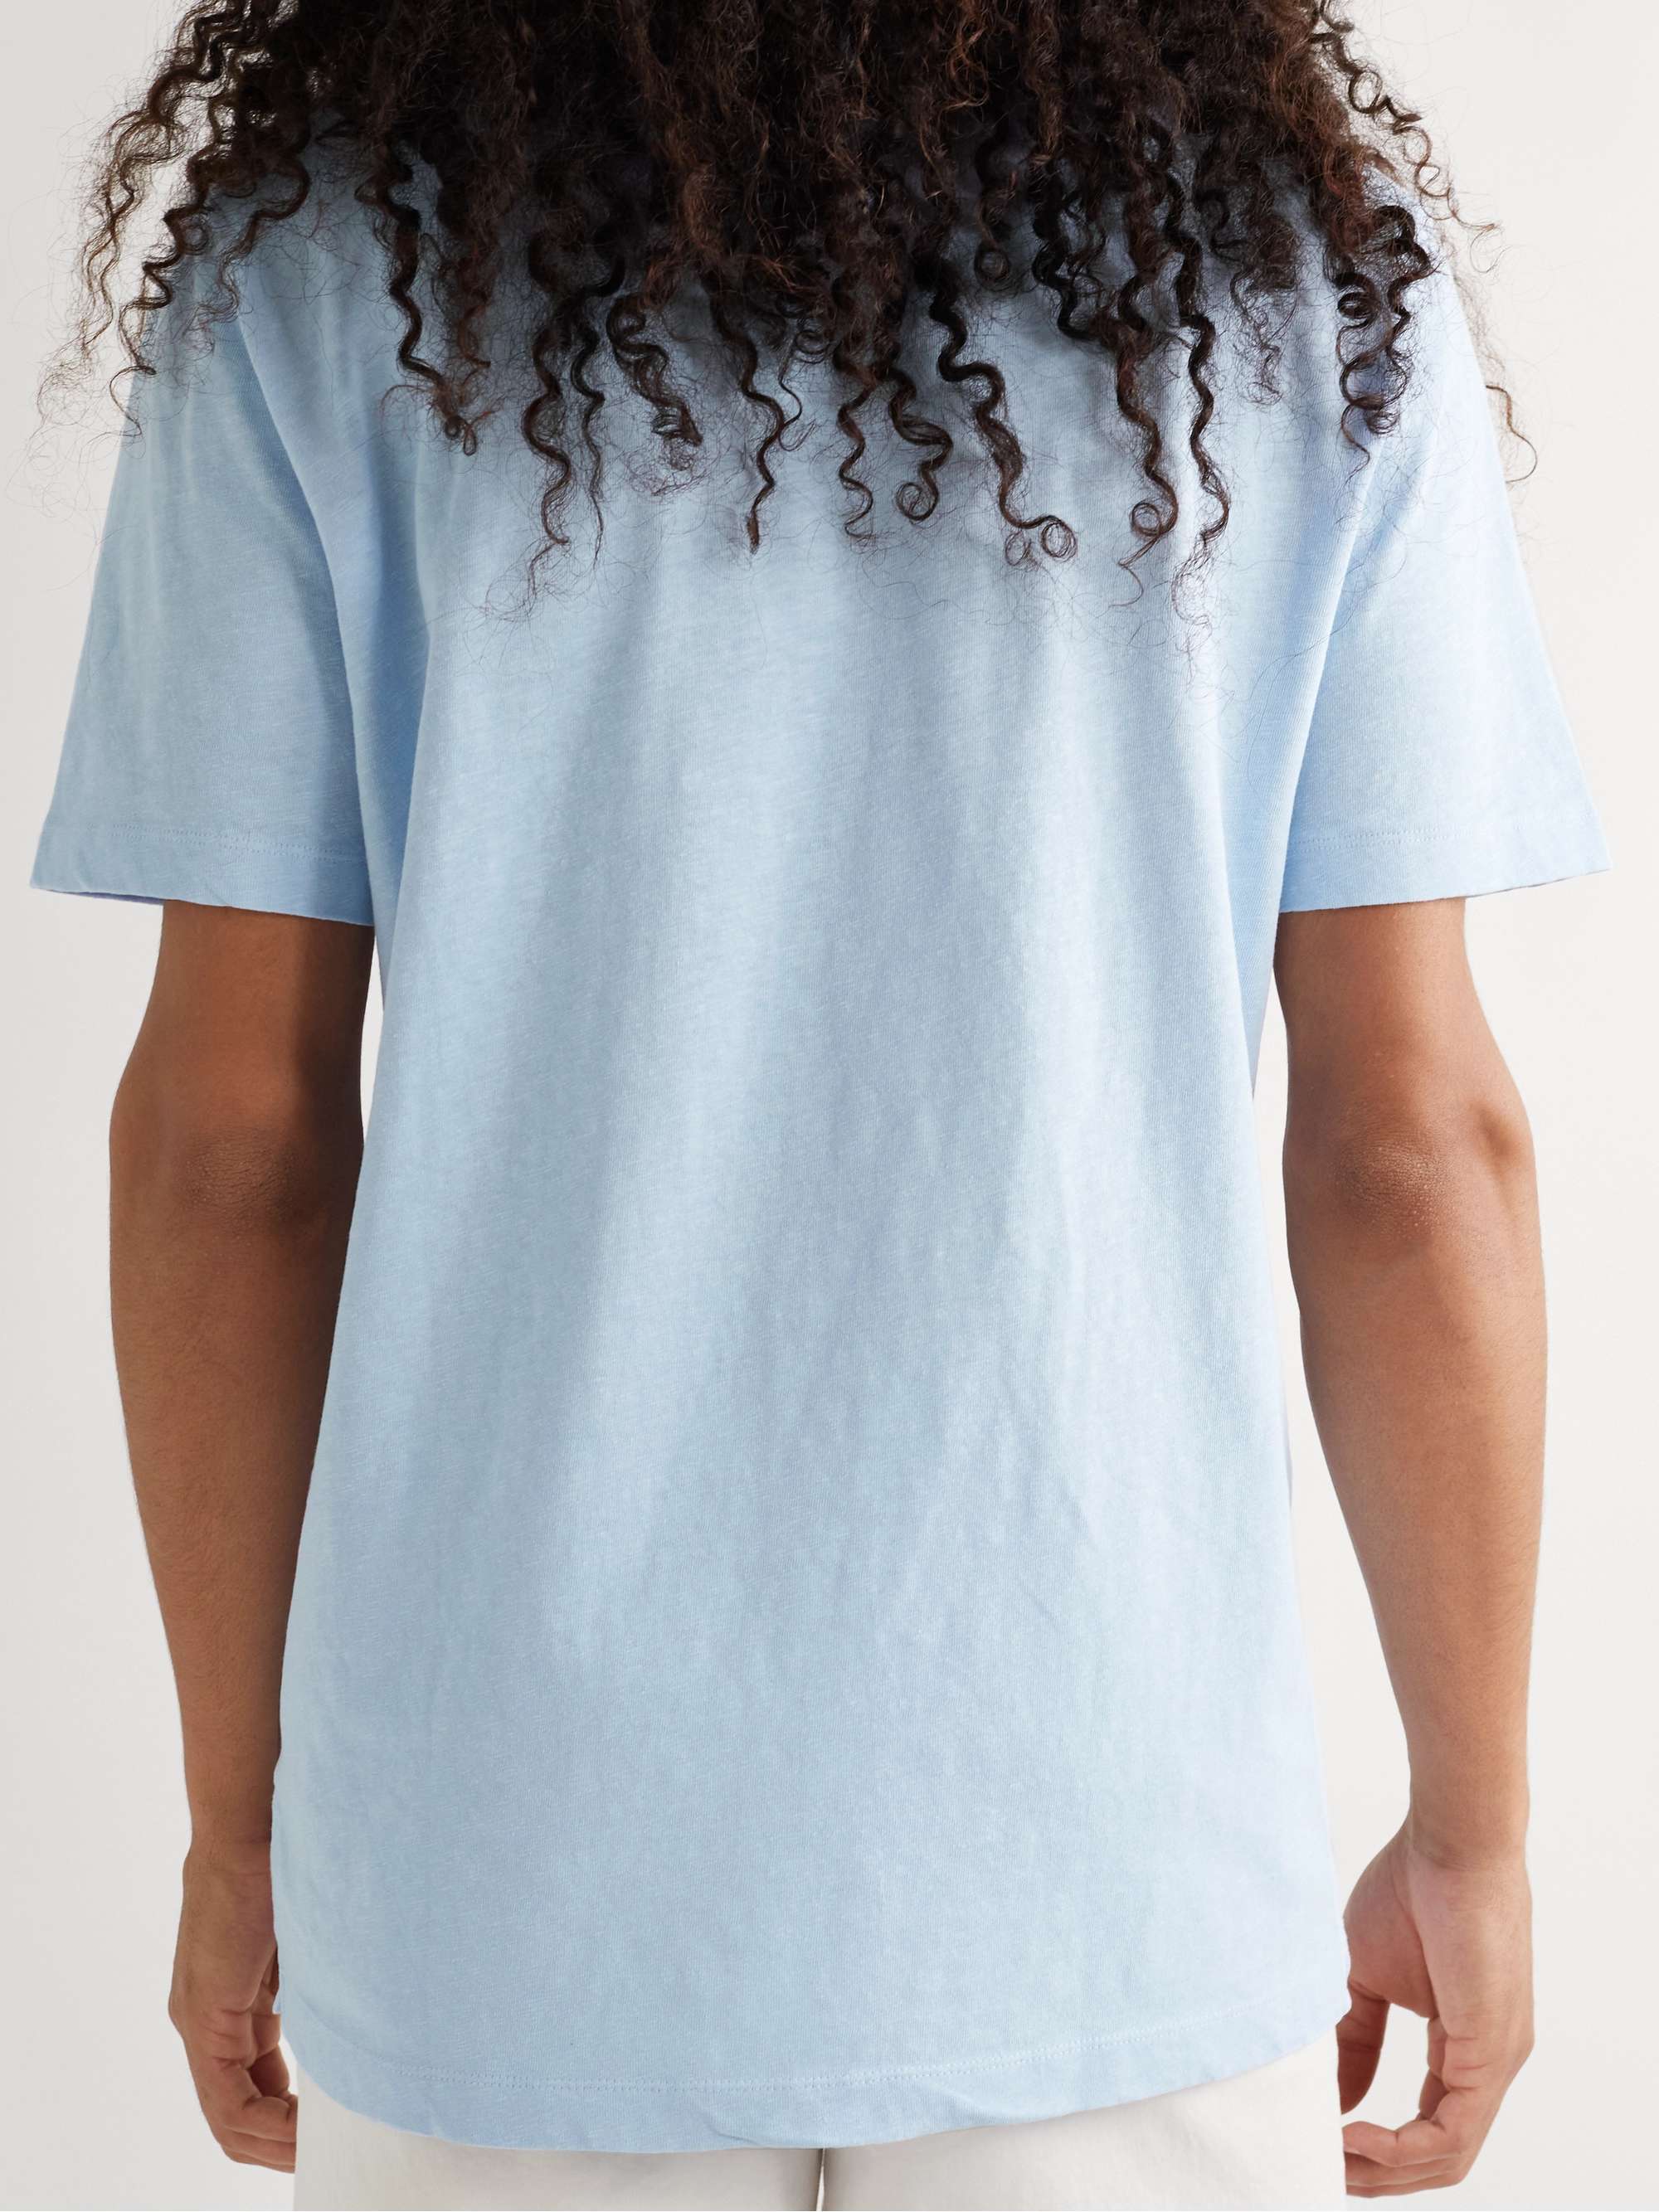 ORLEBAR BROWN Nicolas Cotton and Linen-Blend Jersey T-Shirt for Men ...